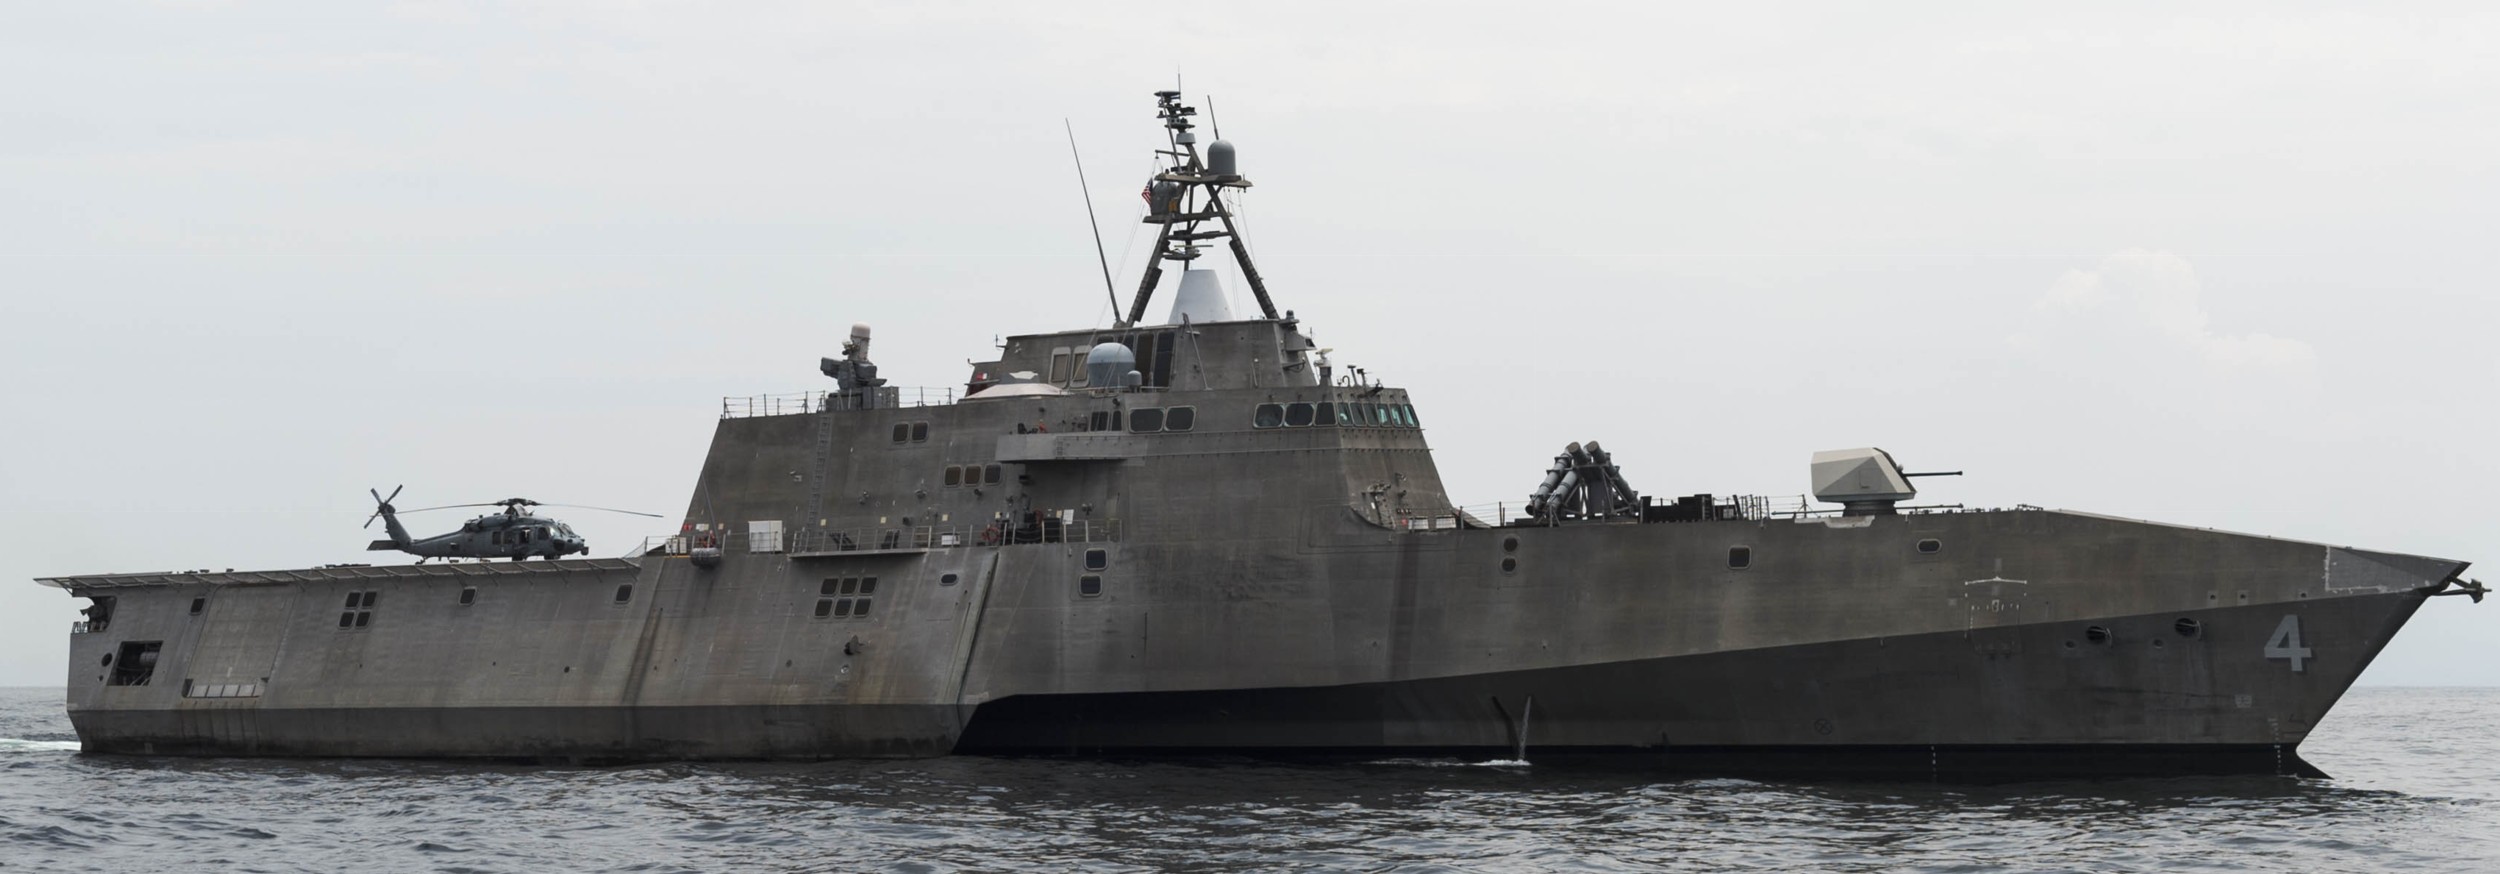 lcs-4 uss coronado independence class littoral combat ship us navy 25 strait of malacca